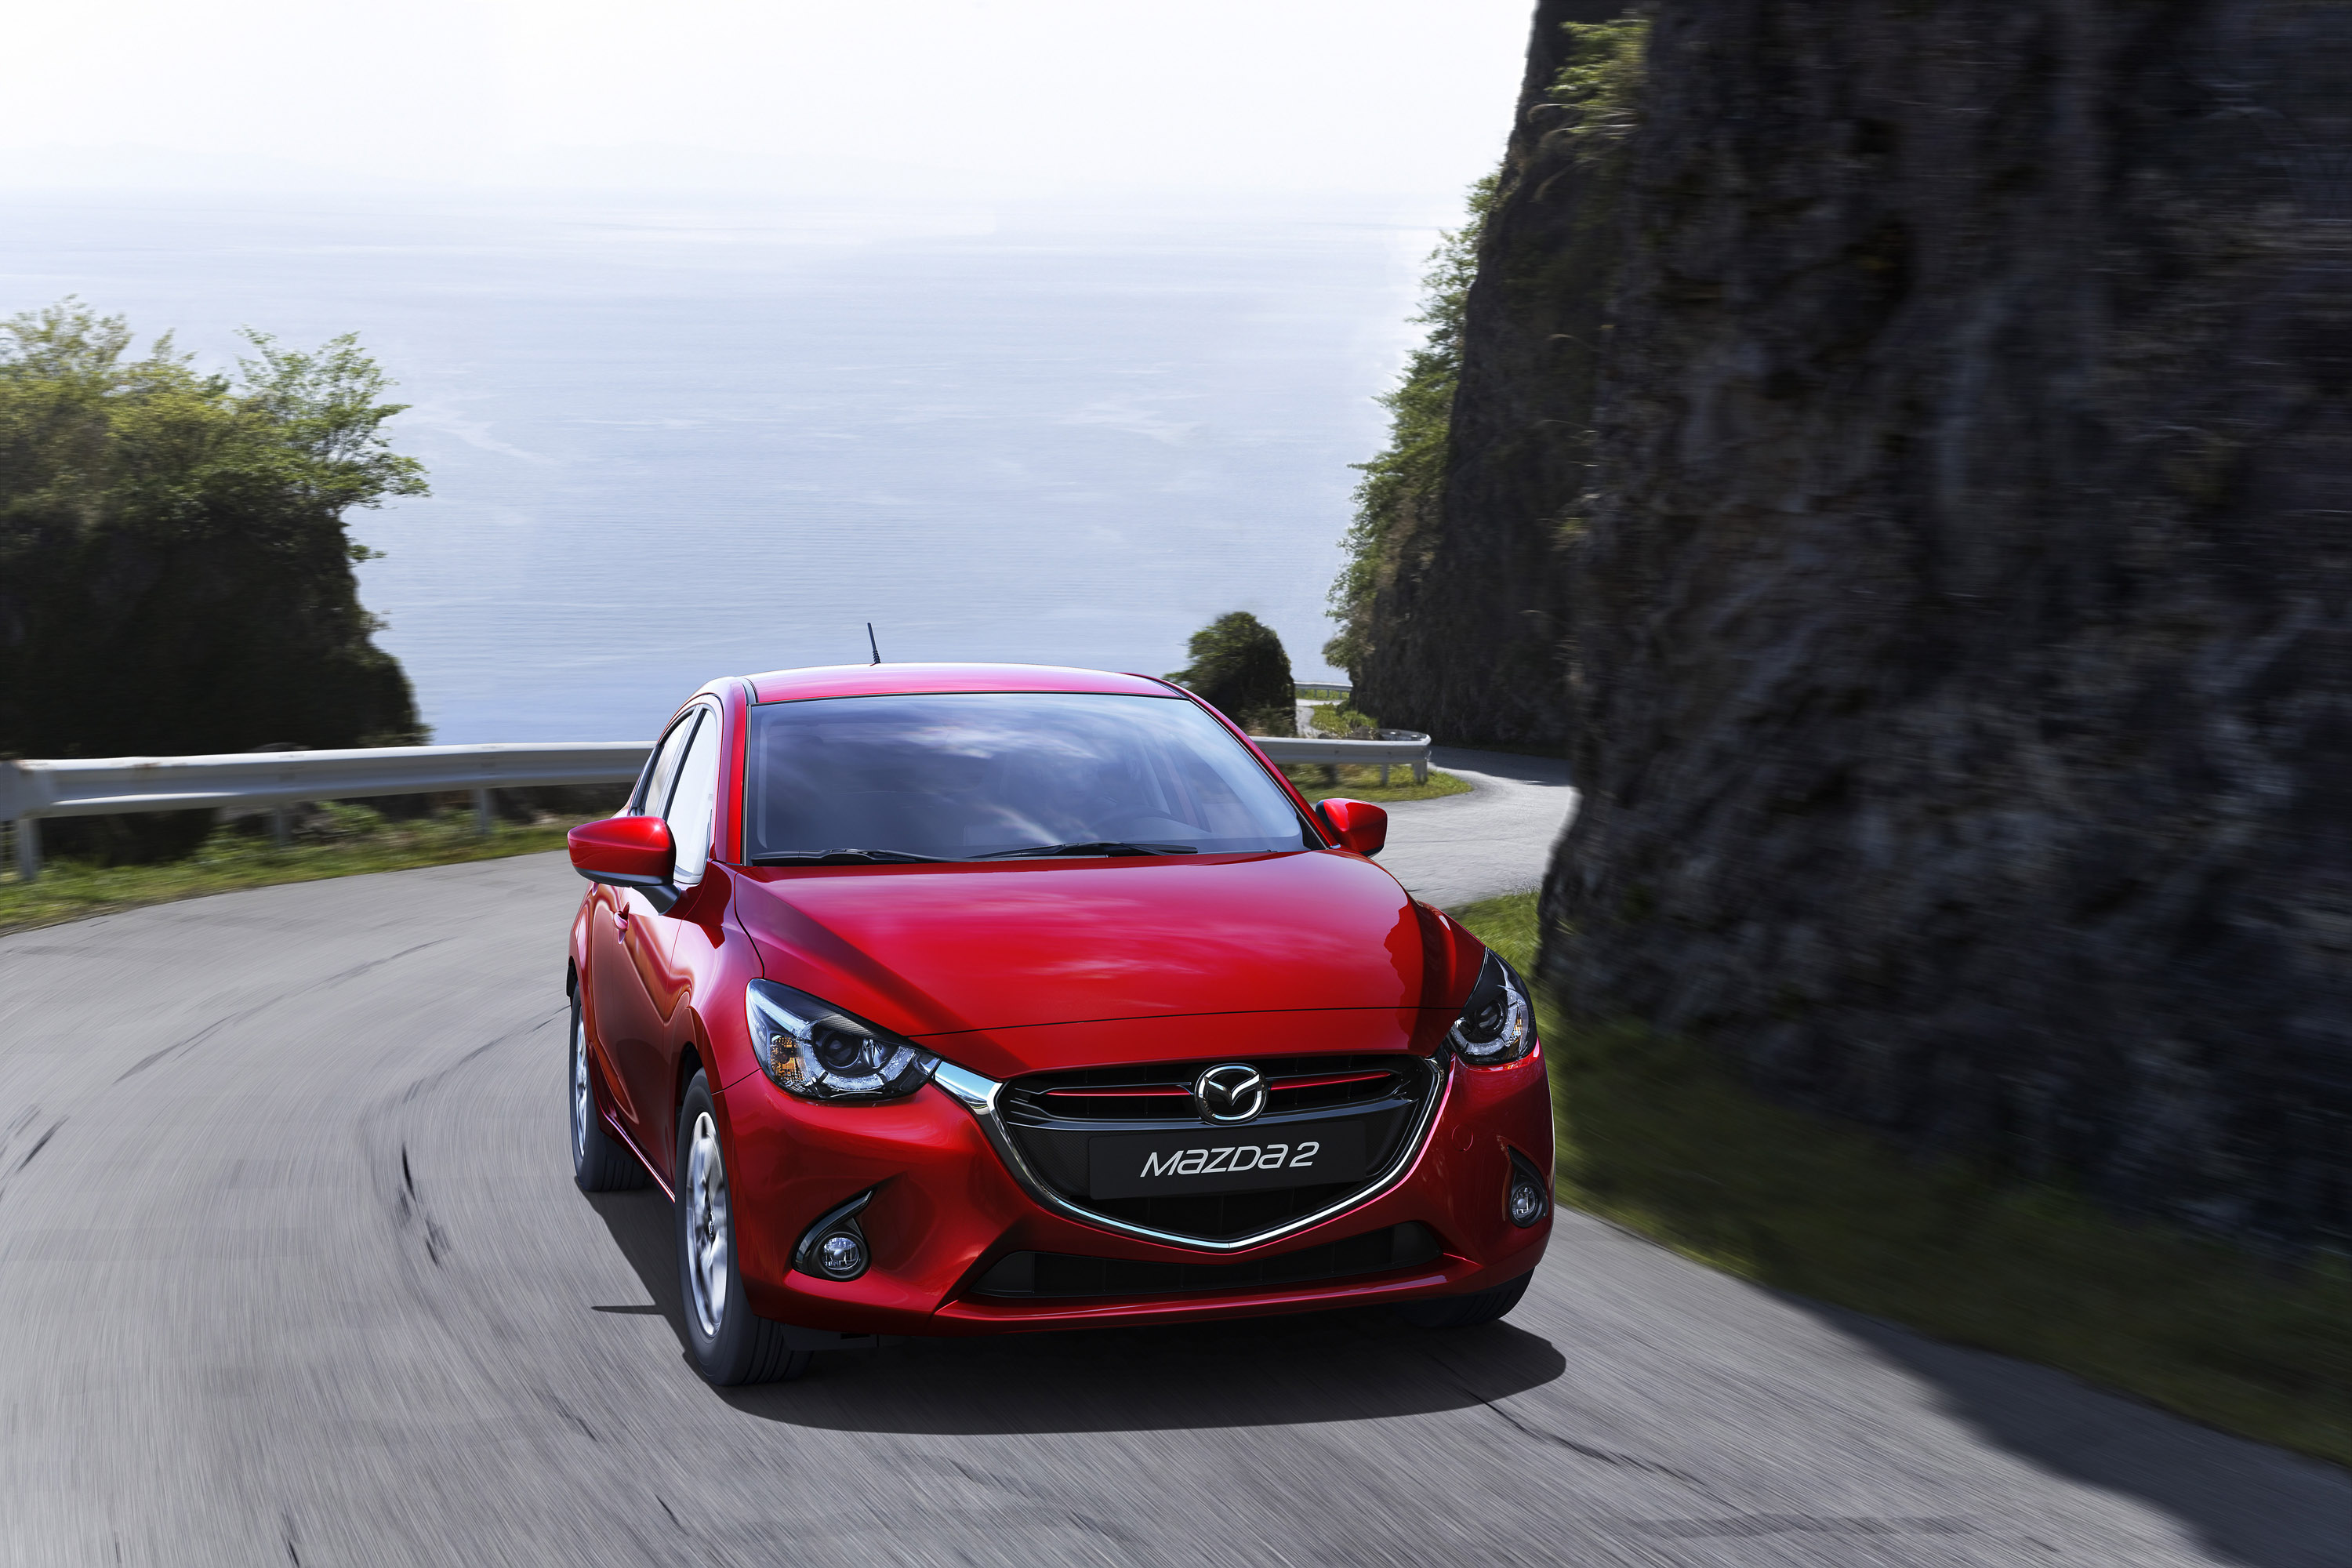 The All-new Mazda2